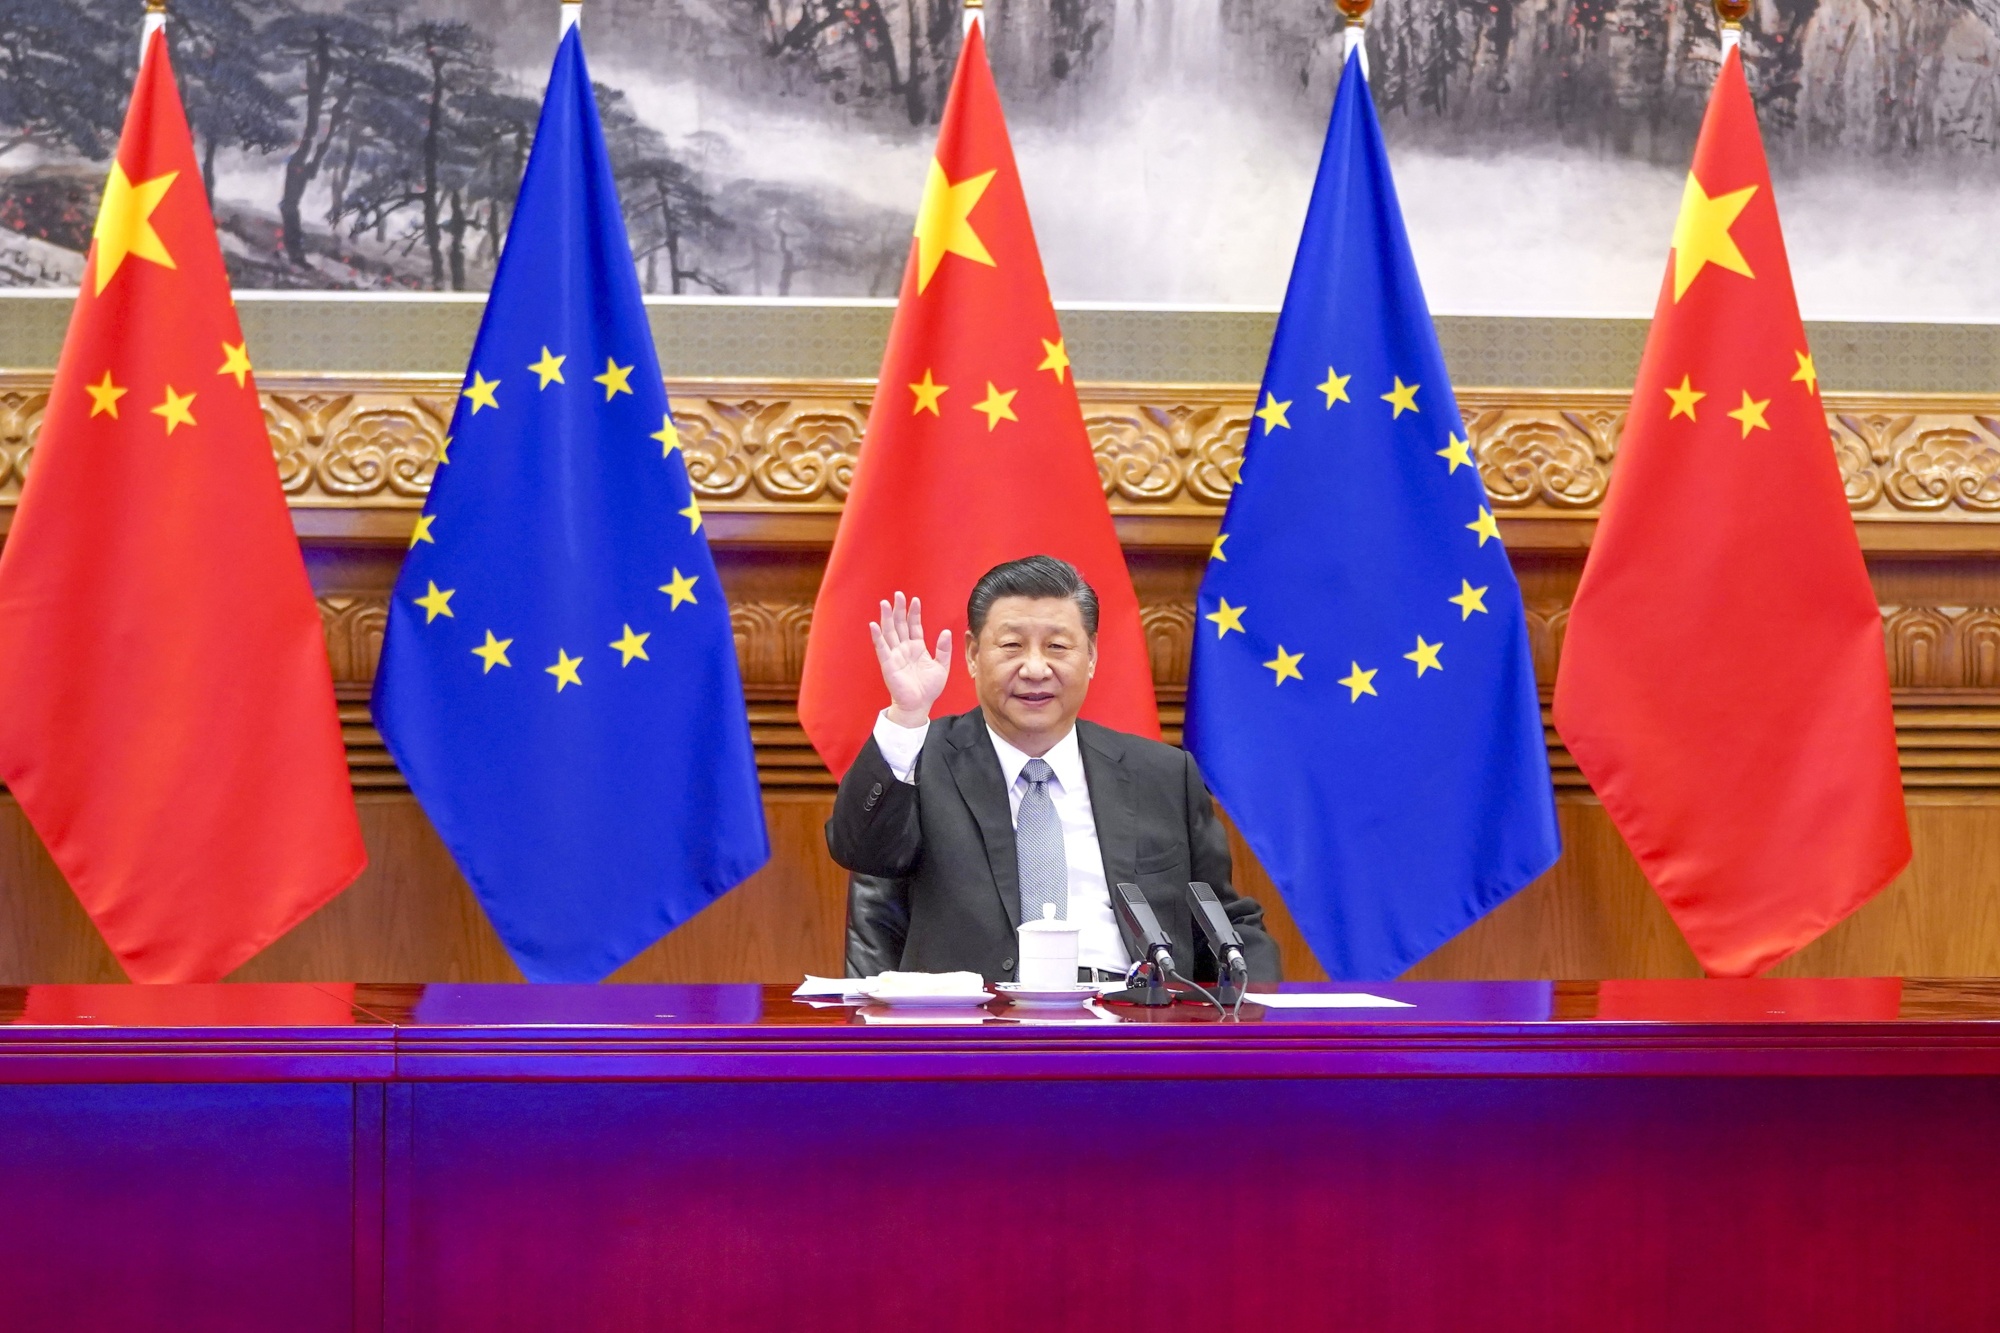 Xi Jinping," "high-stakes talks